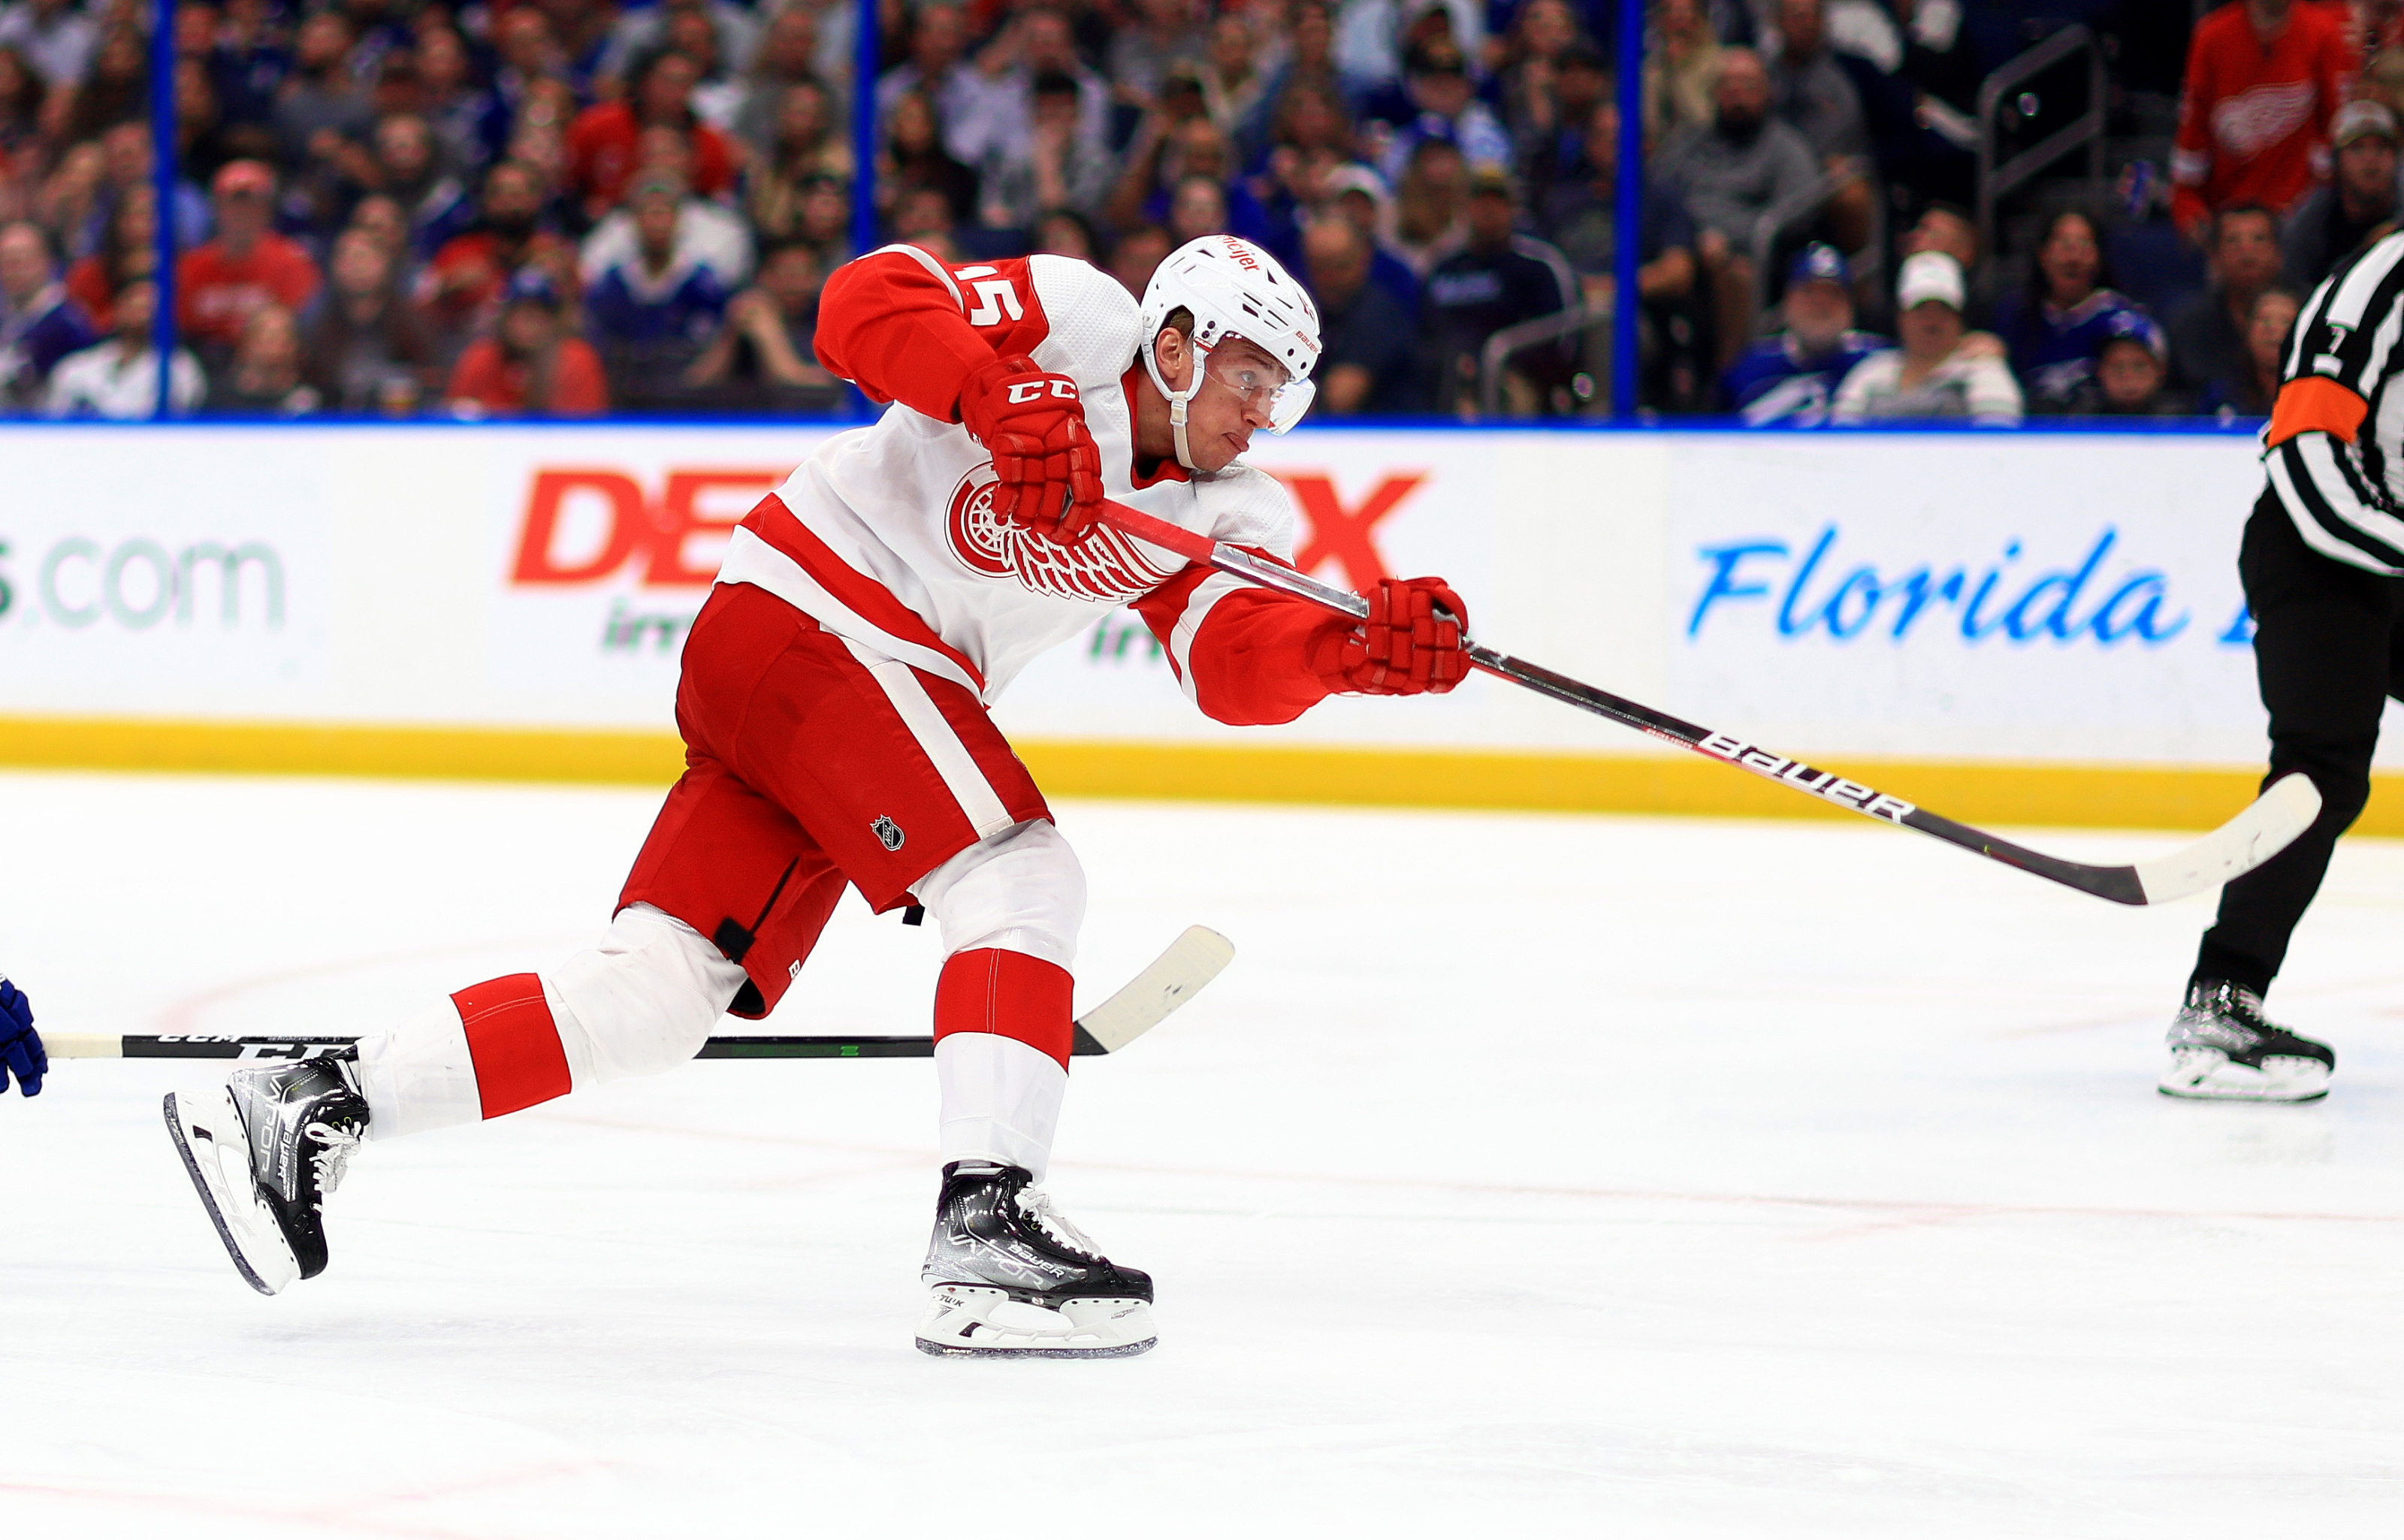 Jakub Vrana to enter the NHL/NHLPA Player Assistance Program